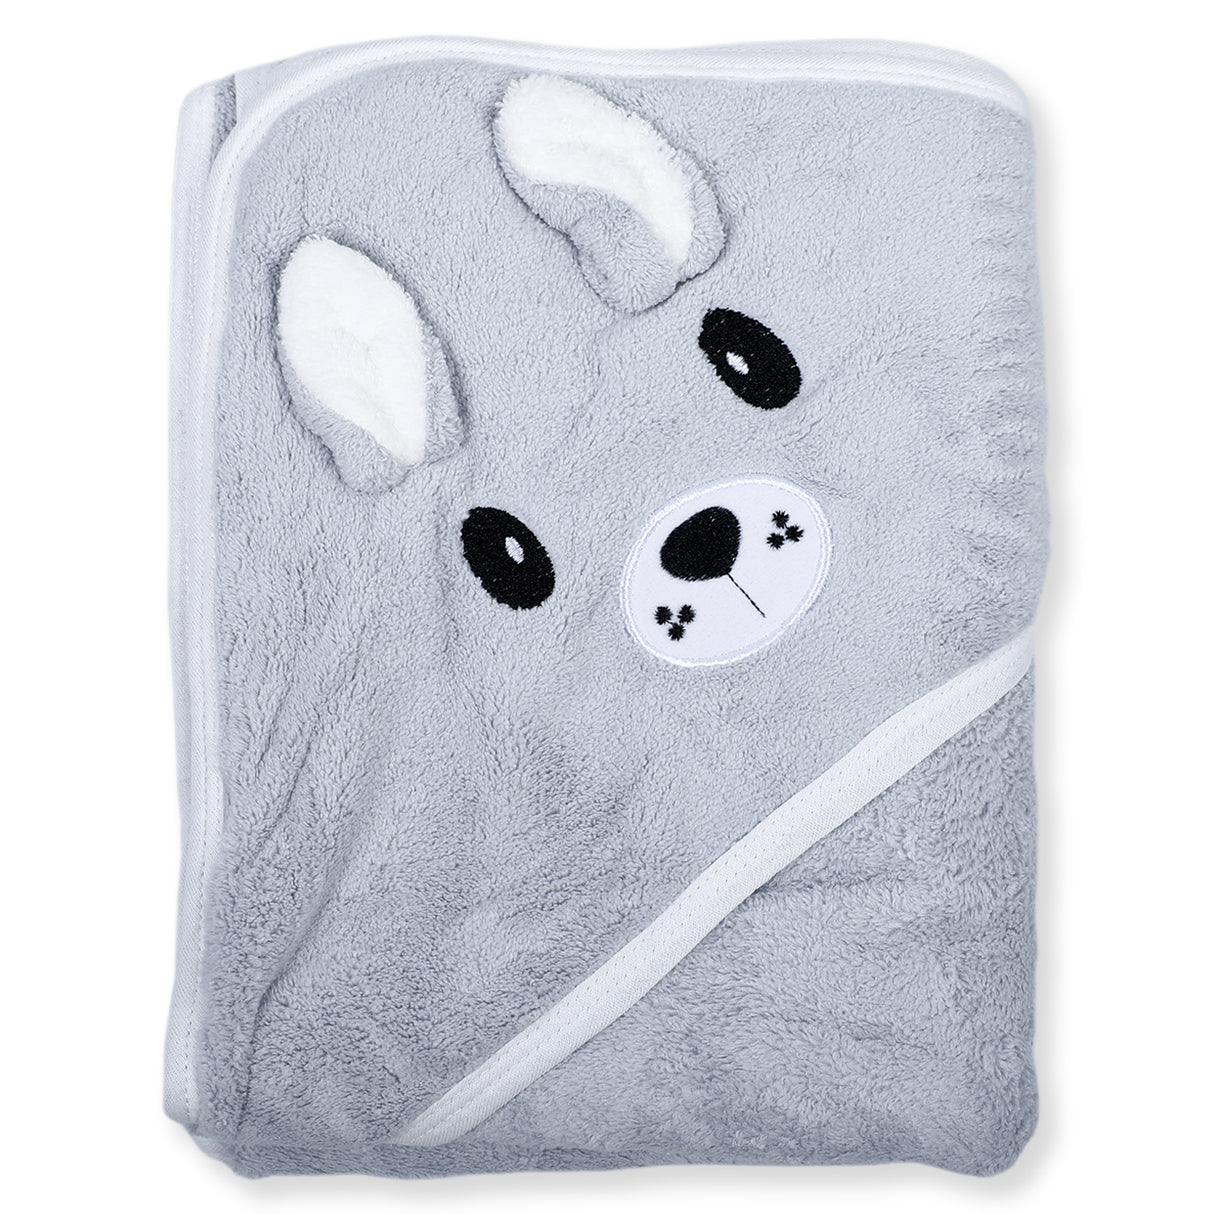 Soft And Comfy Microfiber Hooded Bath Towel